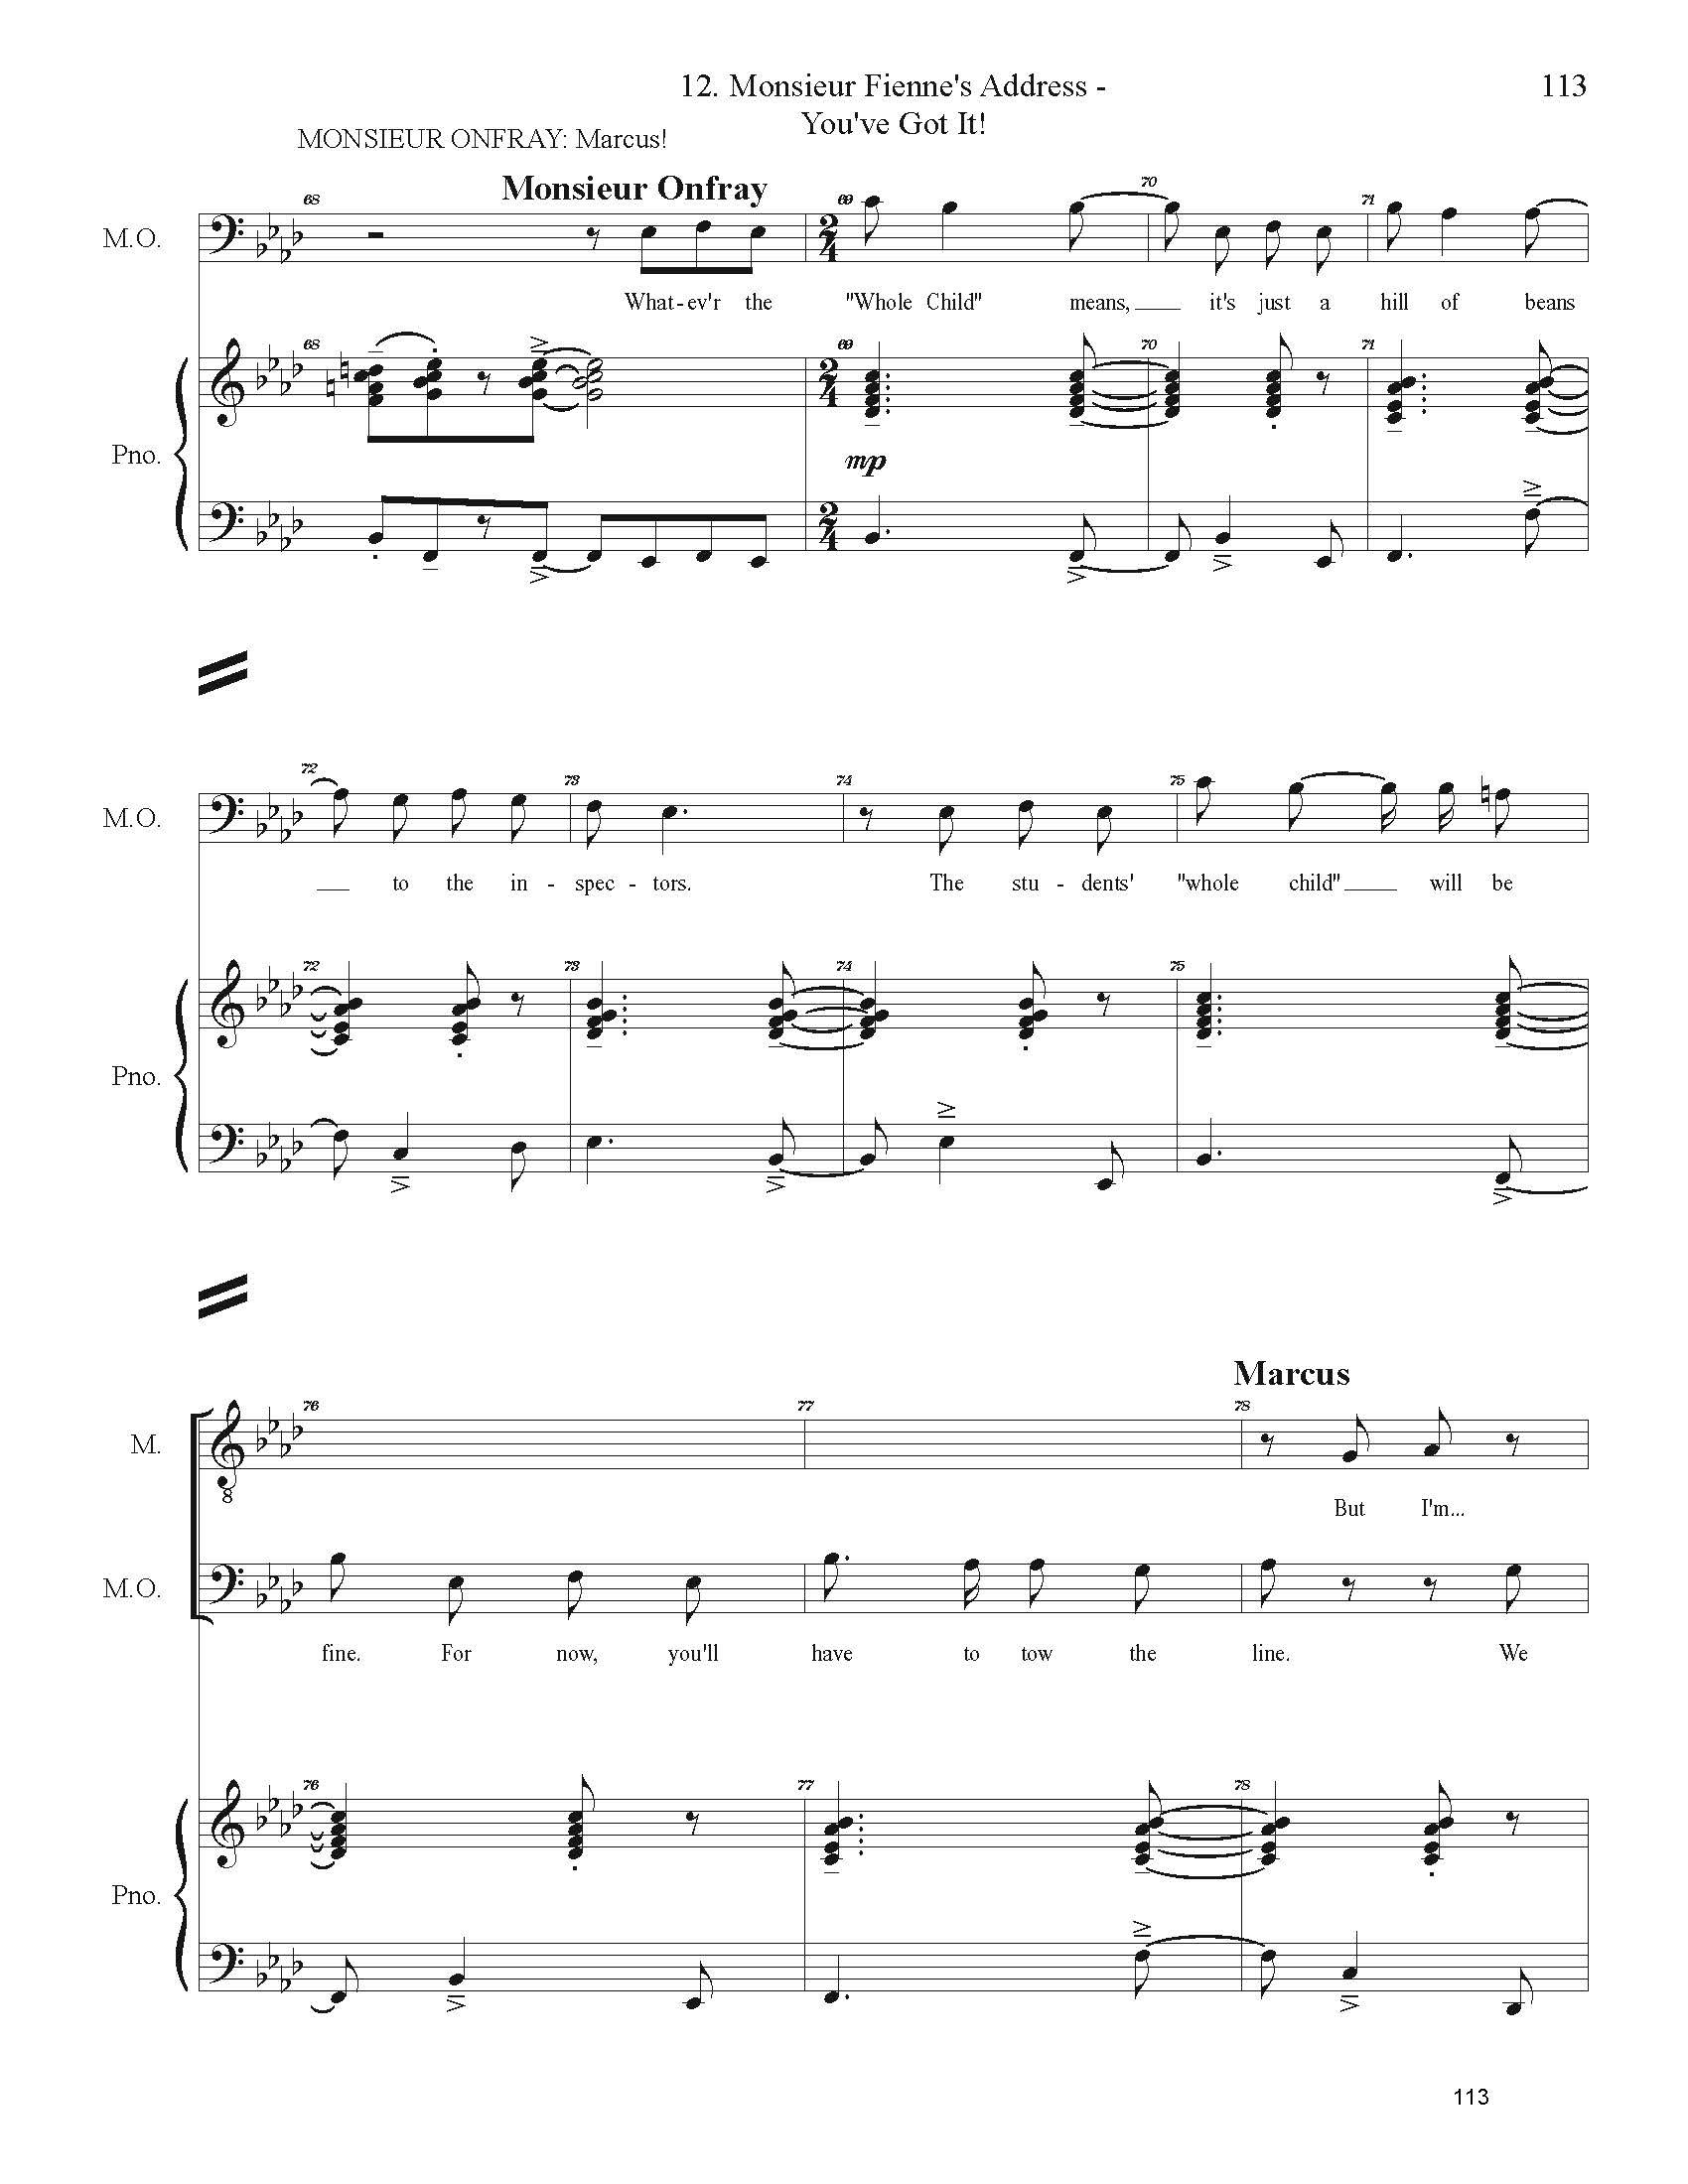 FULL PIANO VOCAL SCORE DRAFT 1 - Score_Page_113.jpg